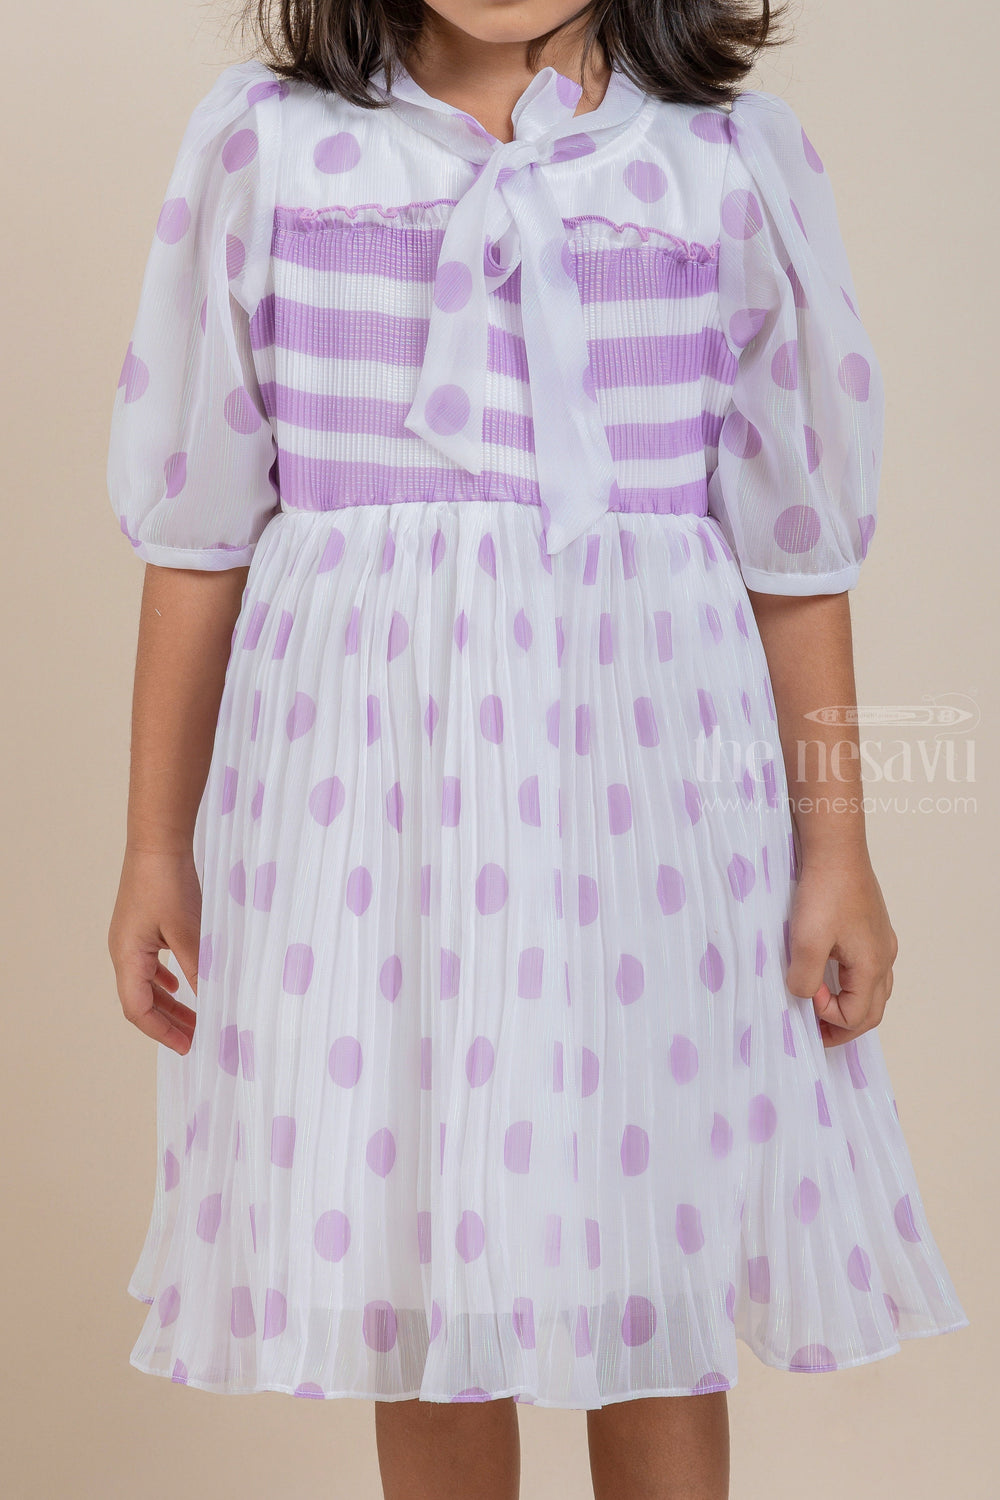 The Nesavu Frocks & Dresses Pleated Purple Polka Dot Gorgette White Frock with Geometrical Striped Yoke For Girls psr silks Nesavu